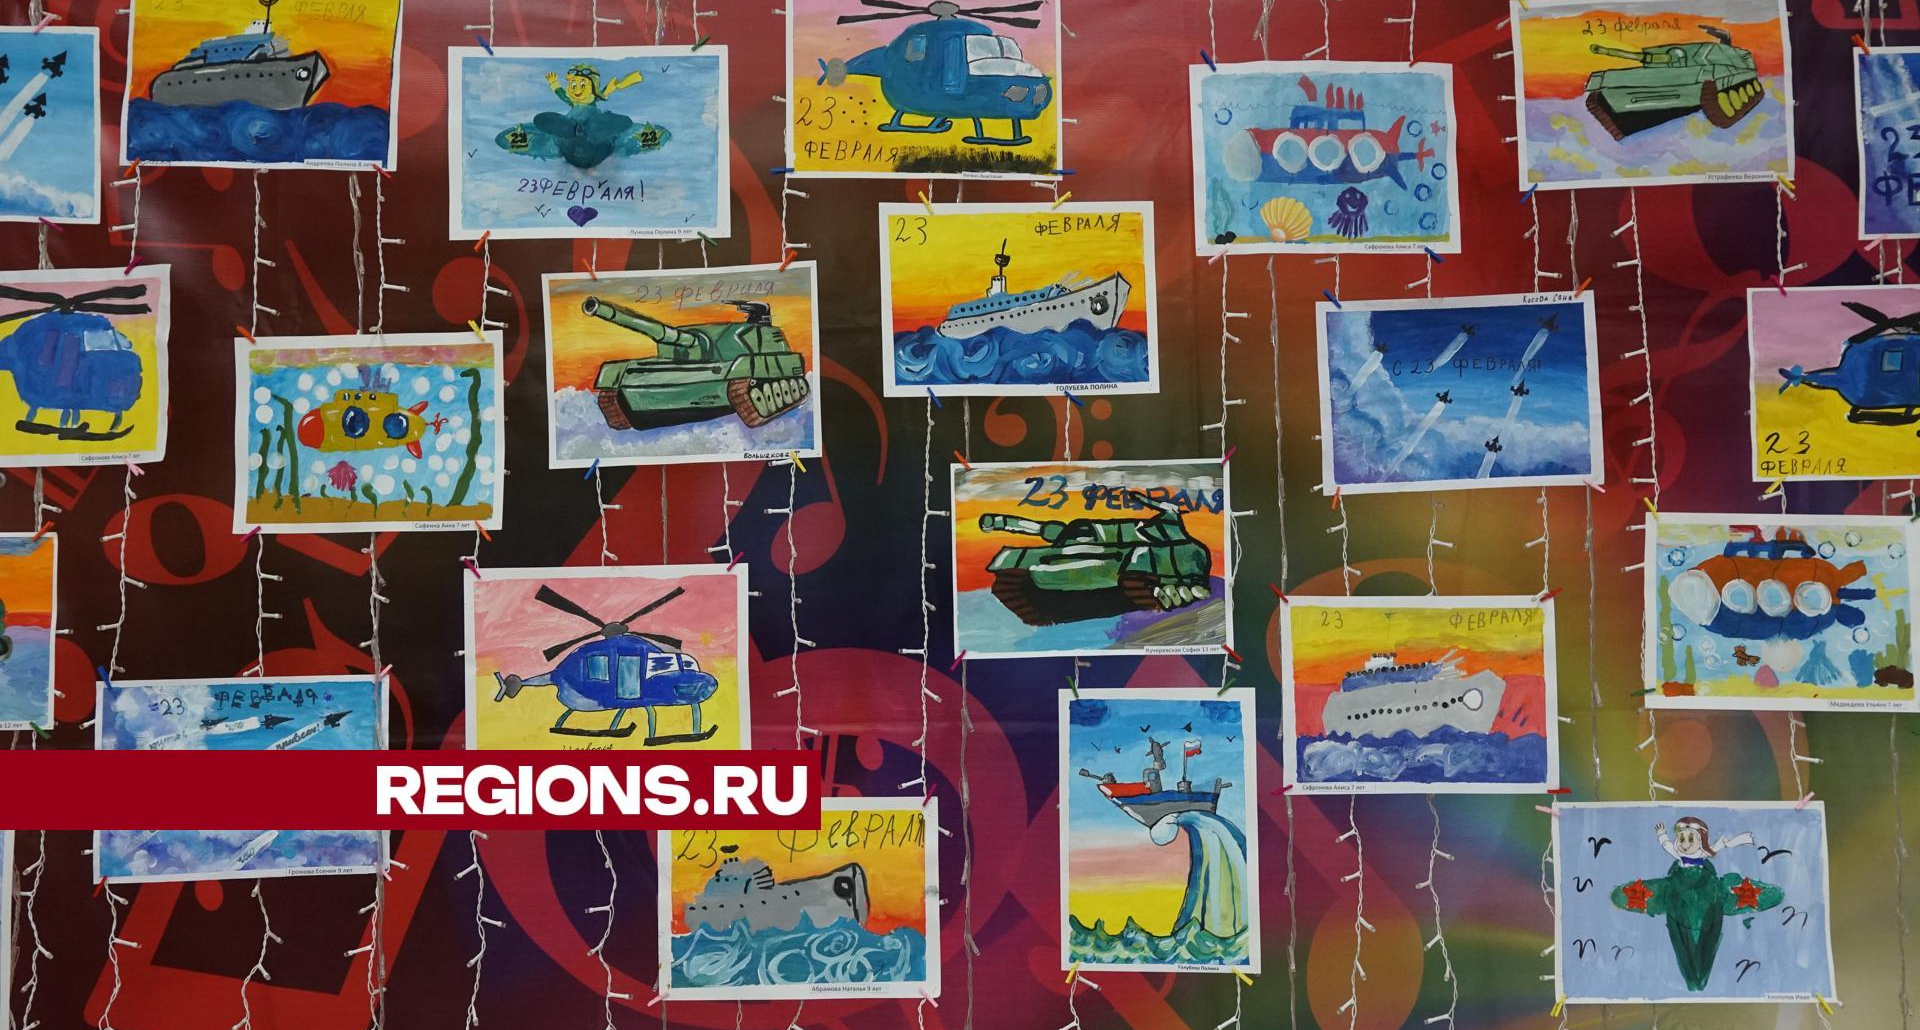 Празднование Дня защитника Отечества в Егорьевске: творчество, развлечения и патриотические стихи